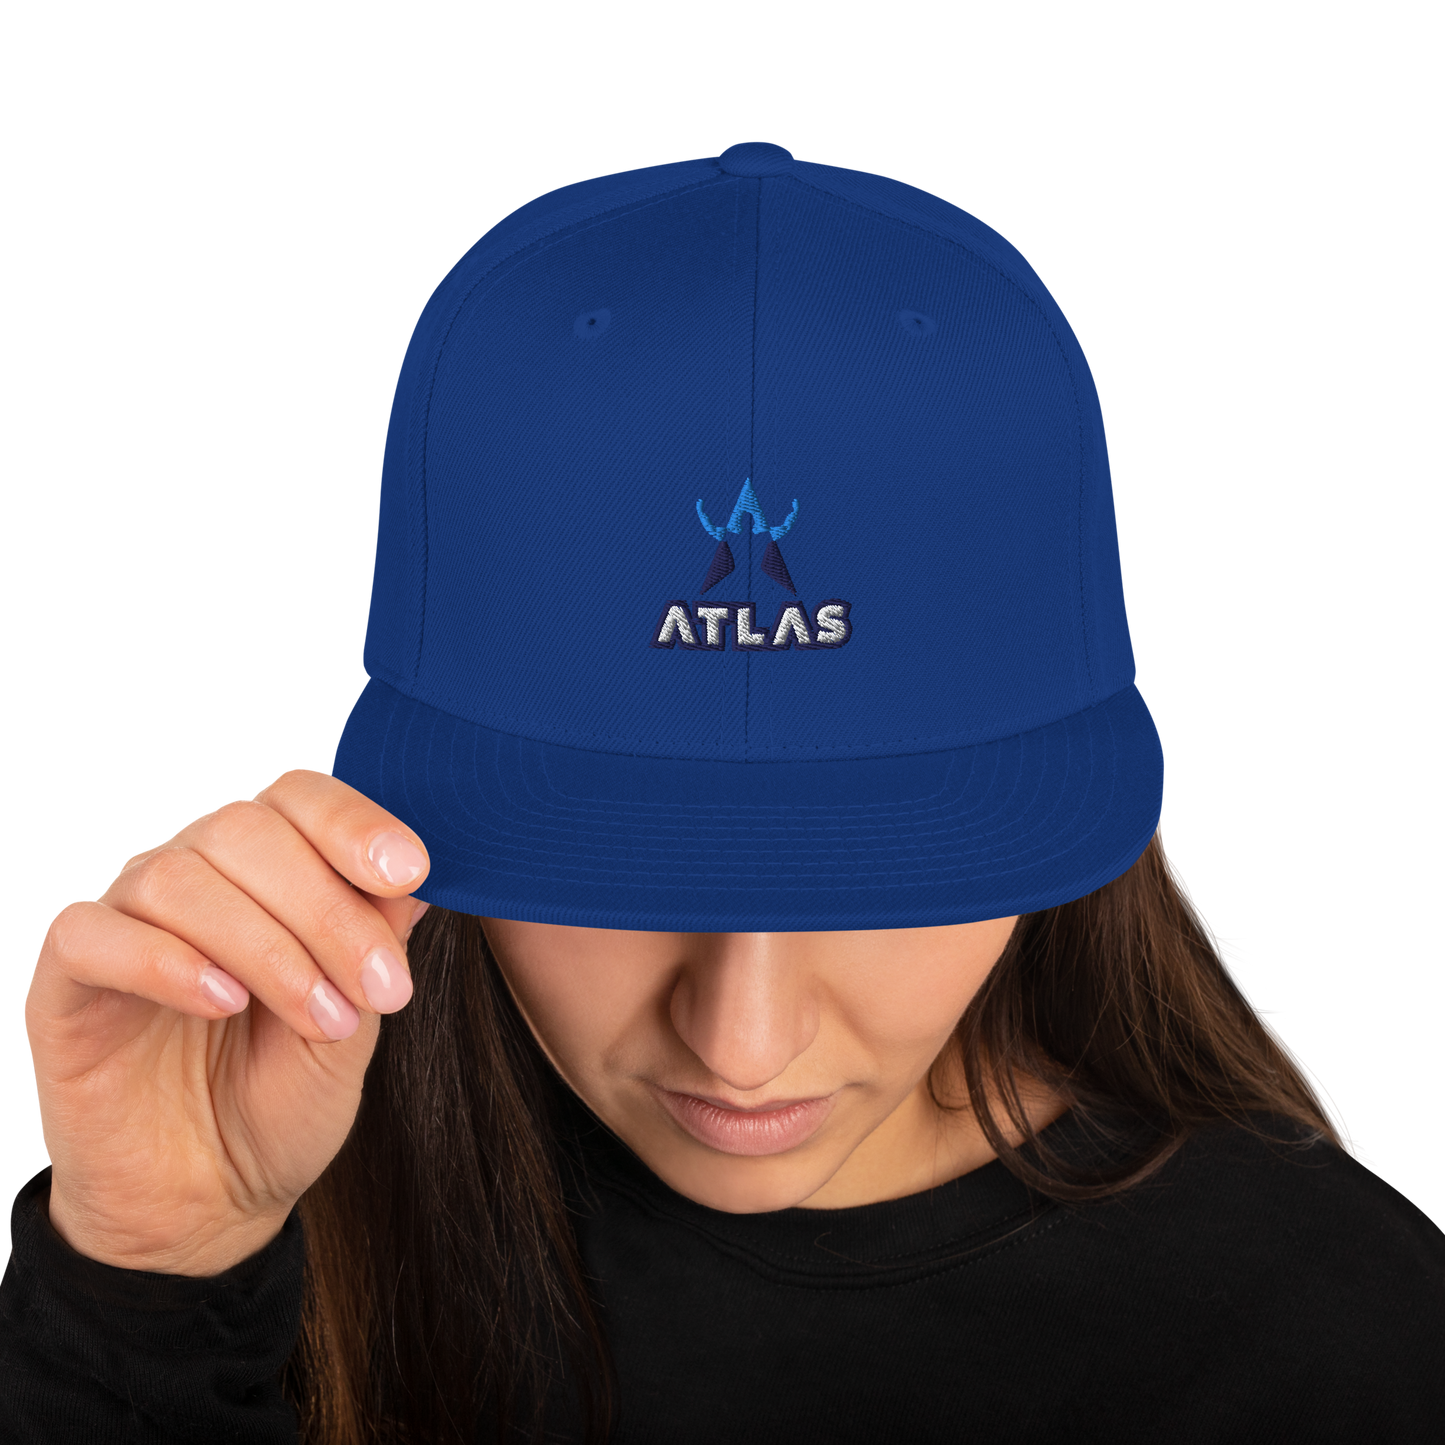 Atlas - Cappellino snapback